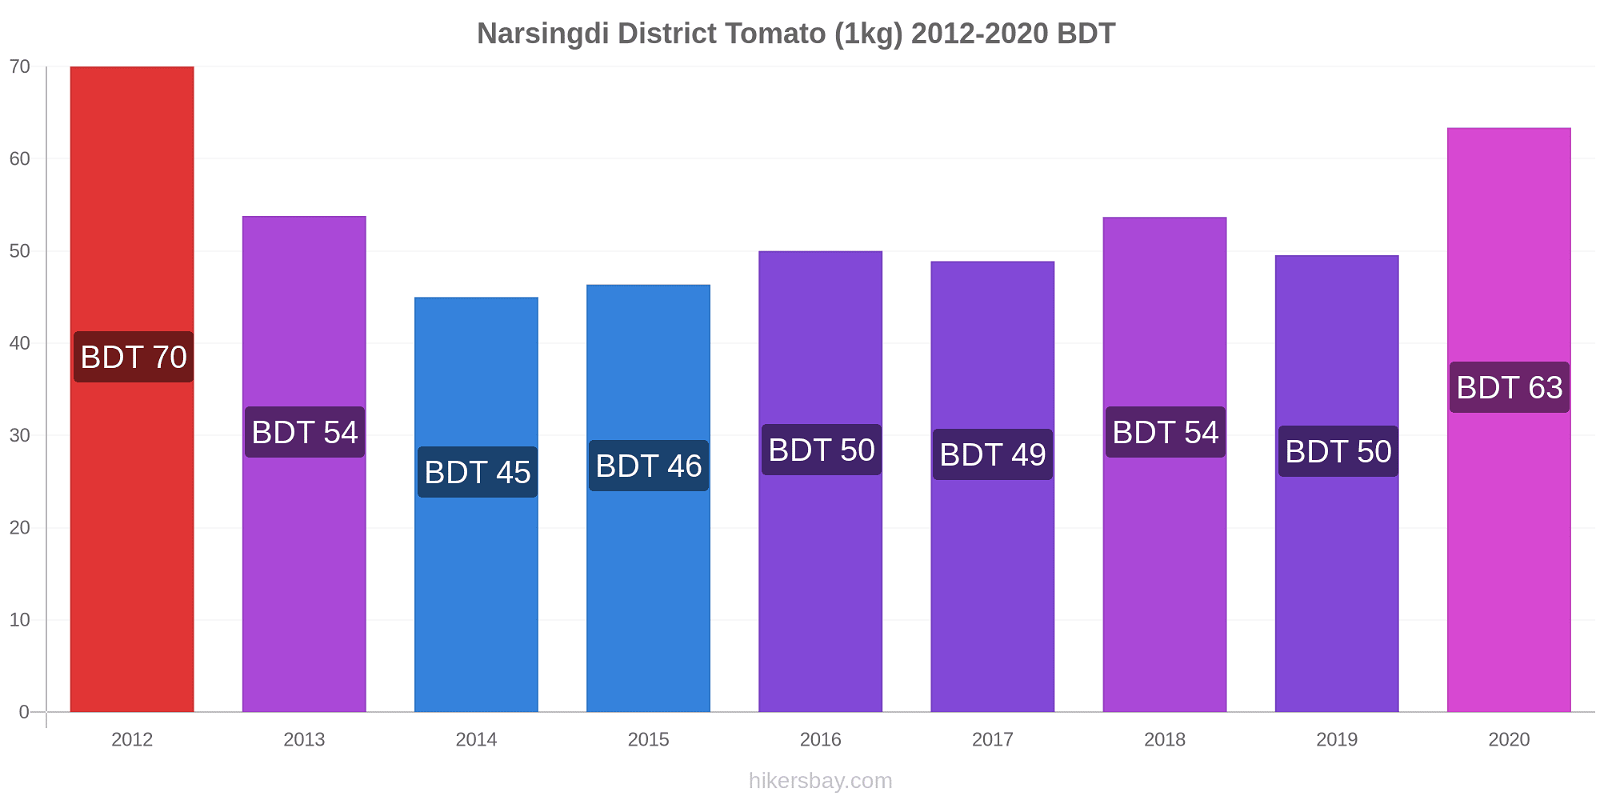 Narsingdi District price changes Tomato (1kg) hikersbay.com